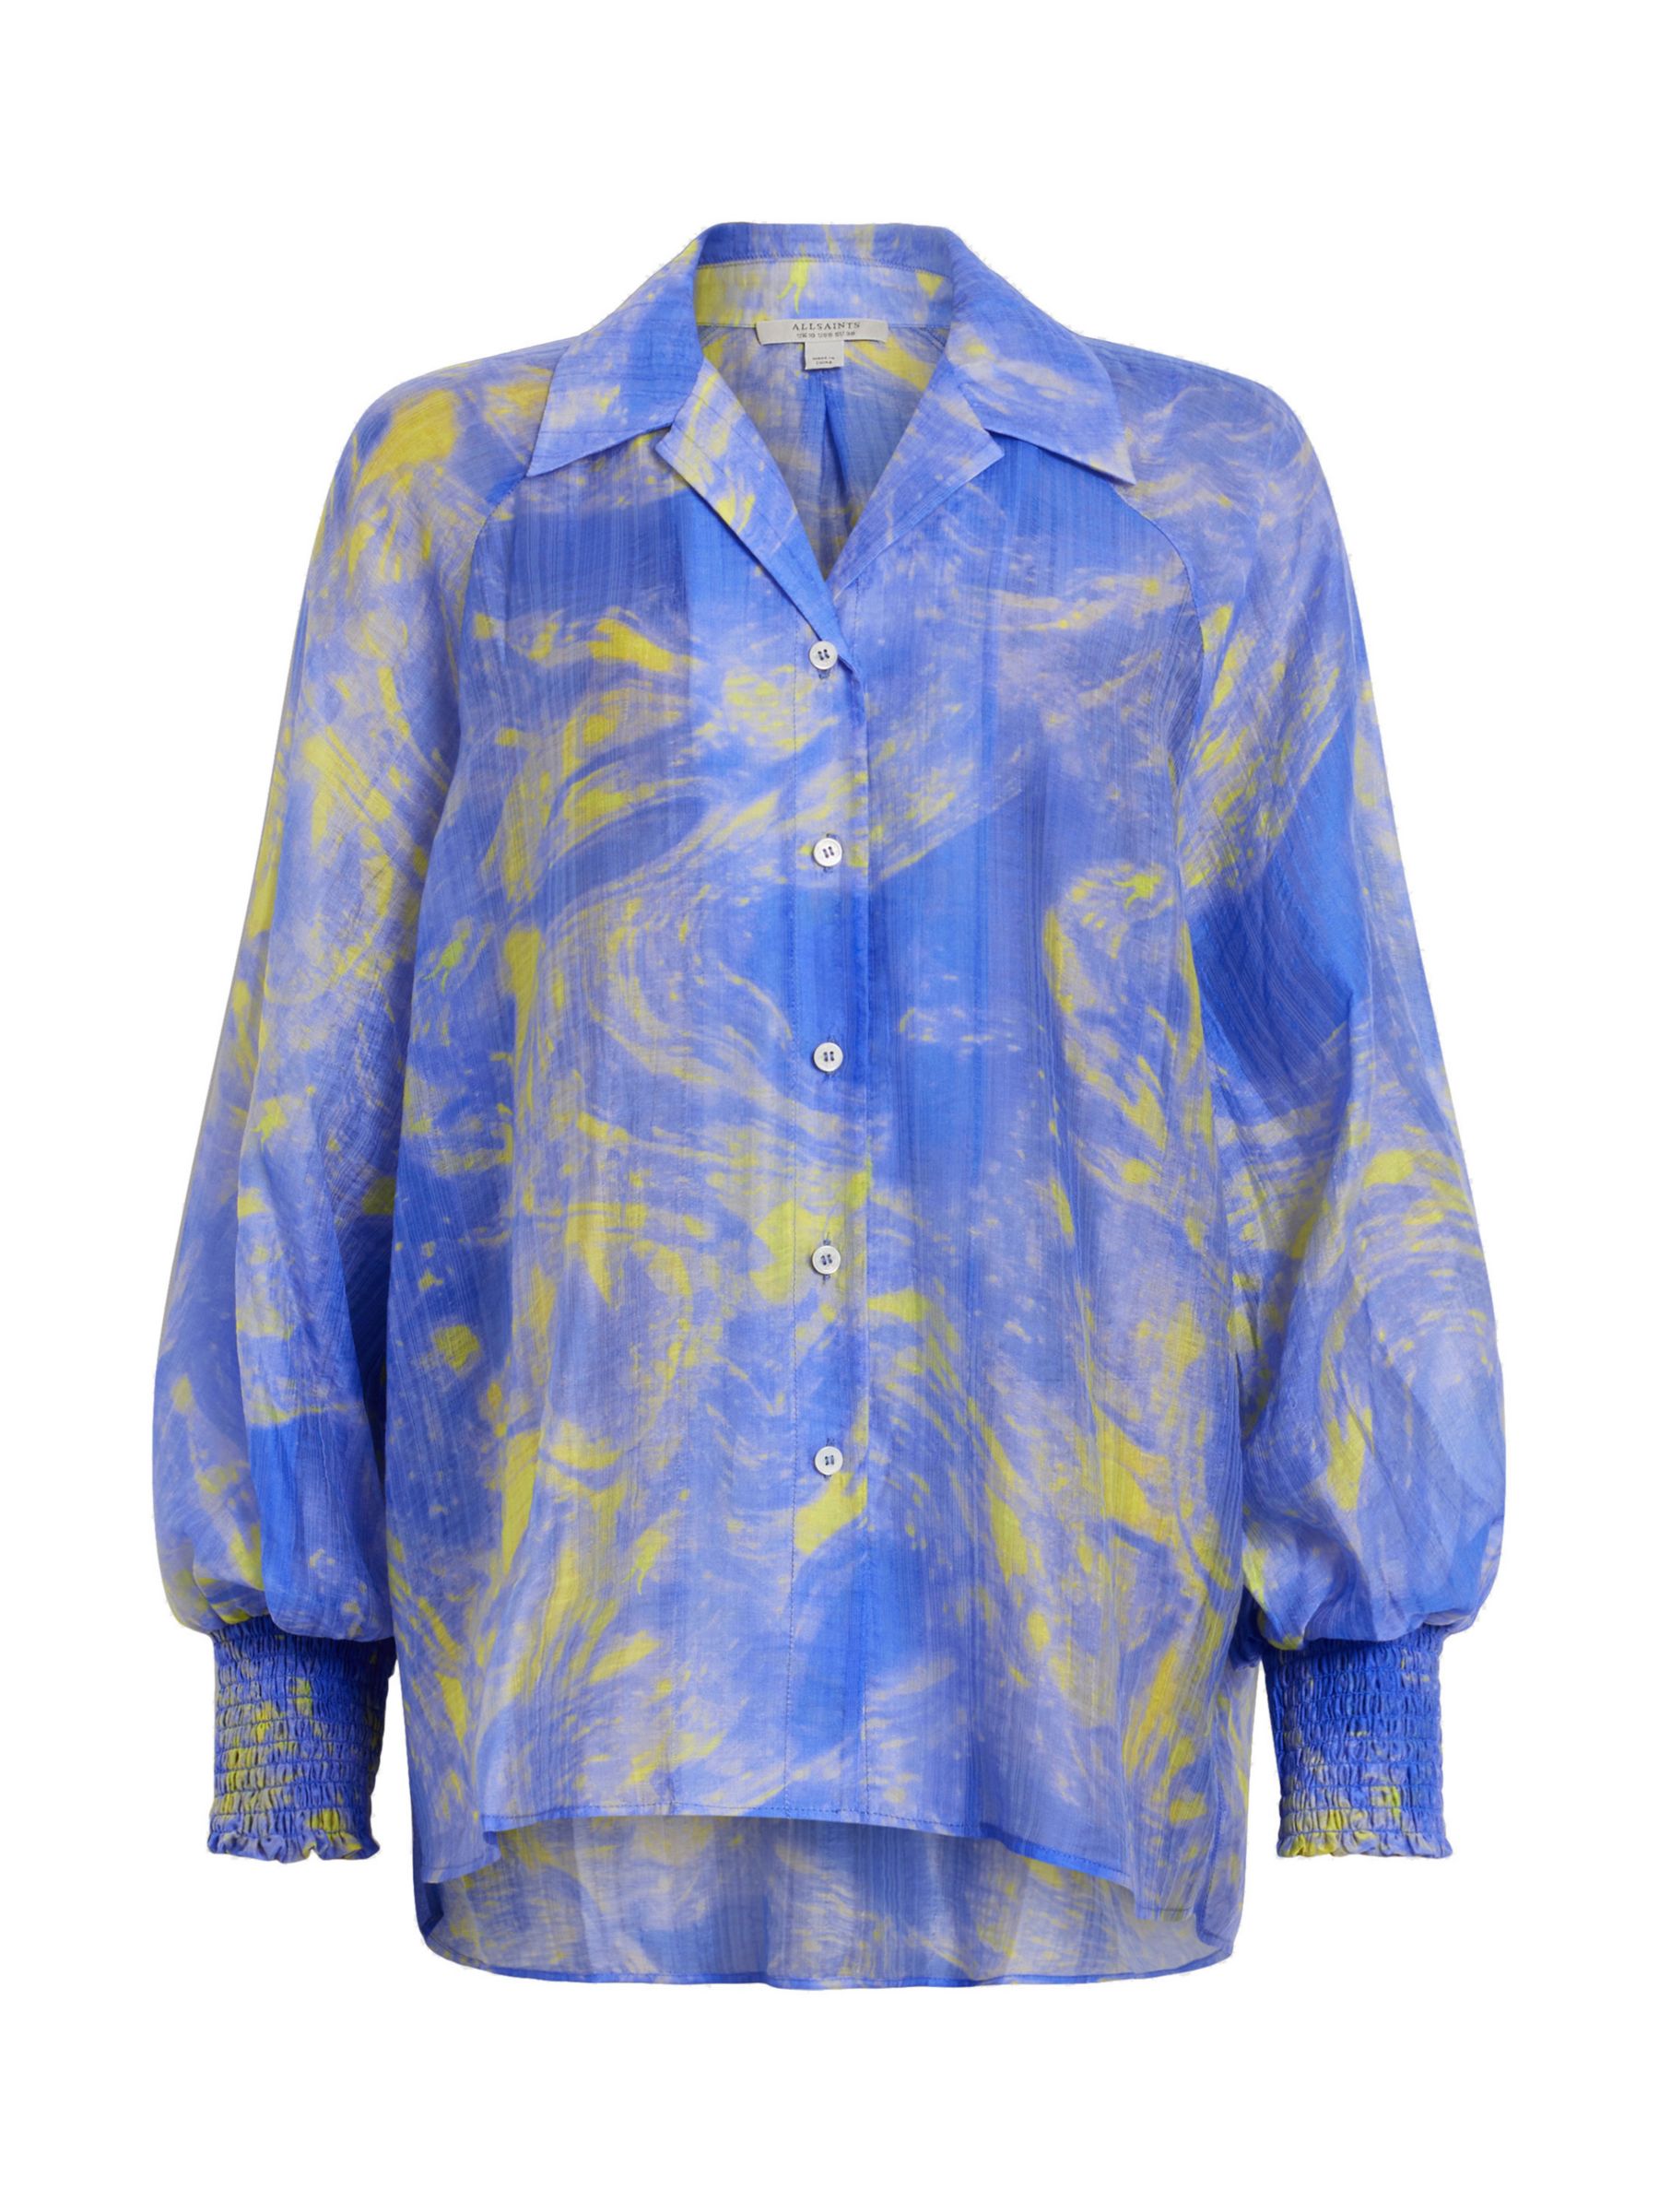 AllSaints Isla Inspiral Abstract Print Shirt, Electric Blue/Yellow, 10